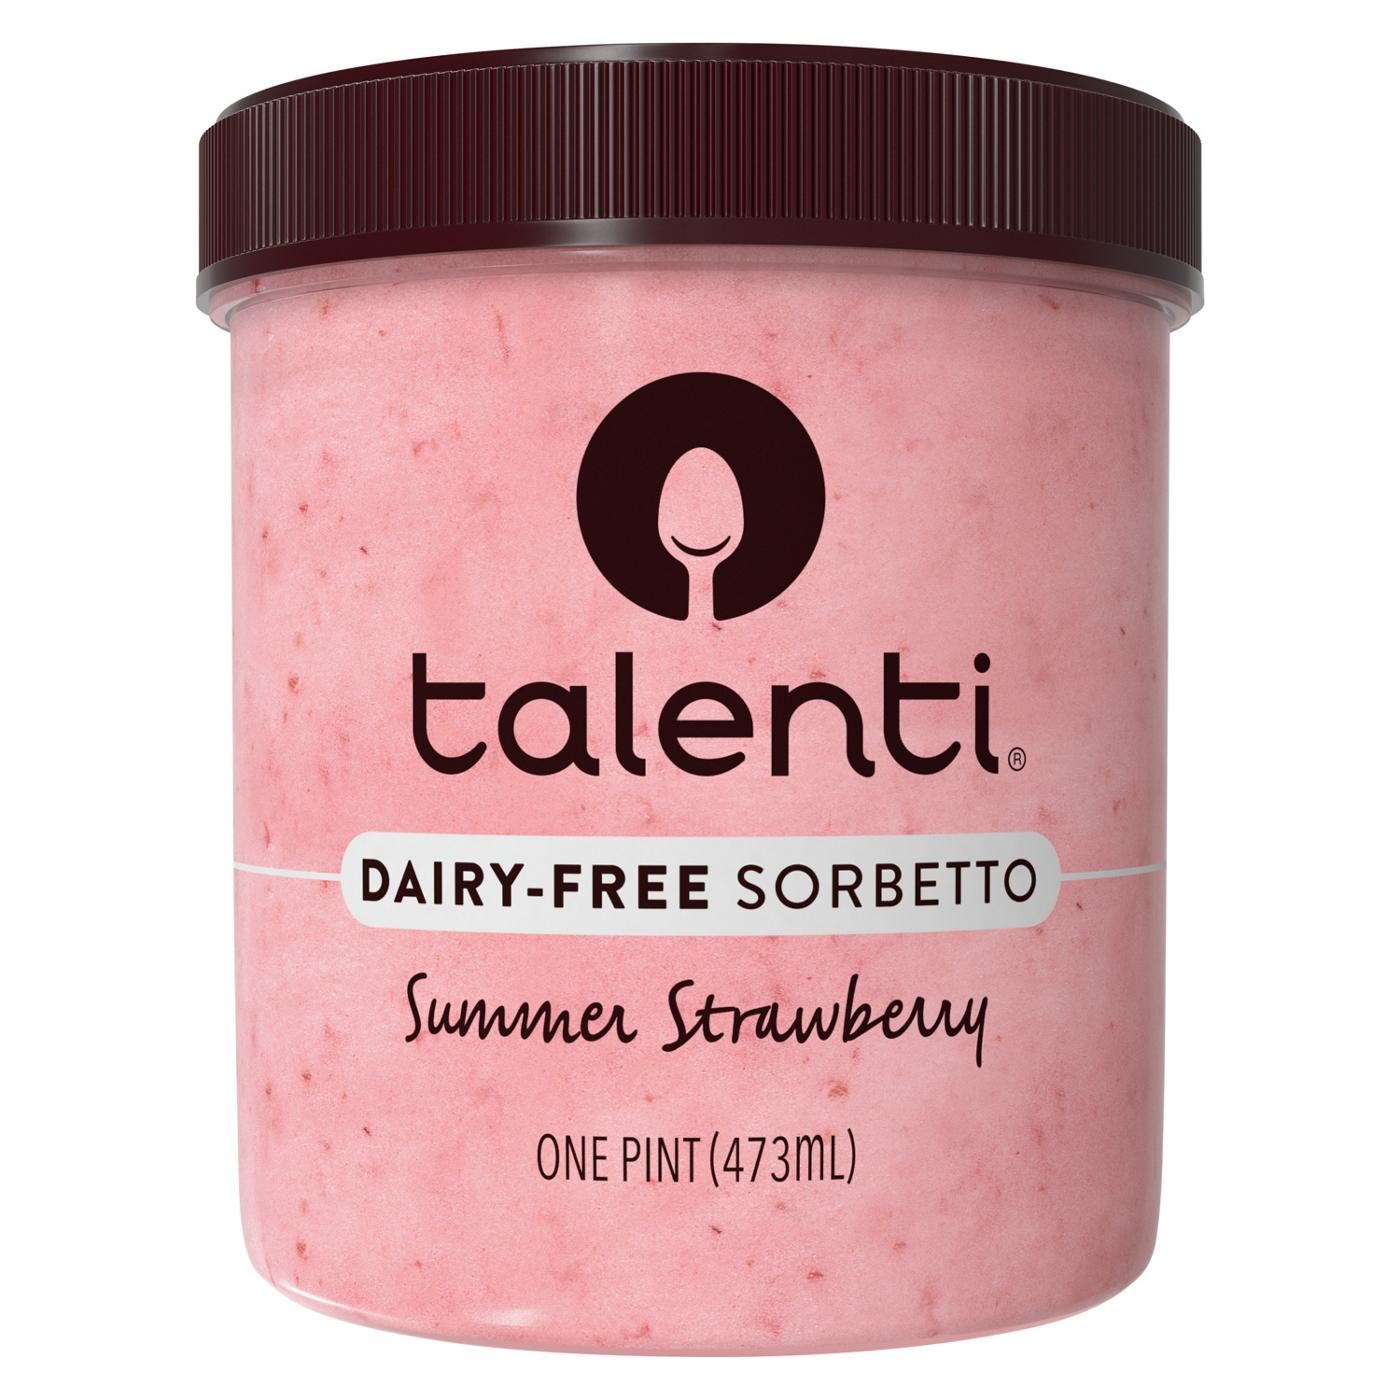 Talenti Summer Strawberry Dairy-Free Sorbetto; image 1 of 8